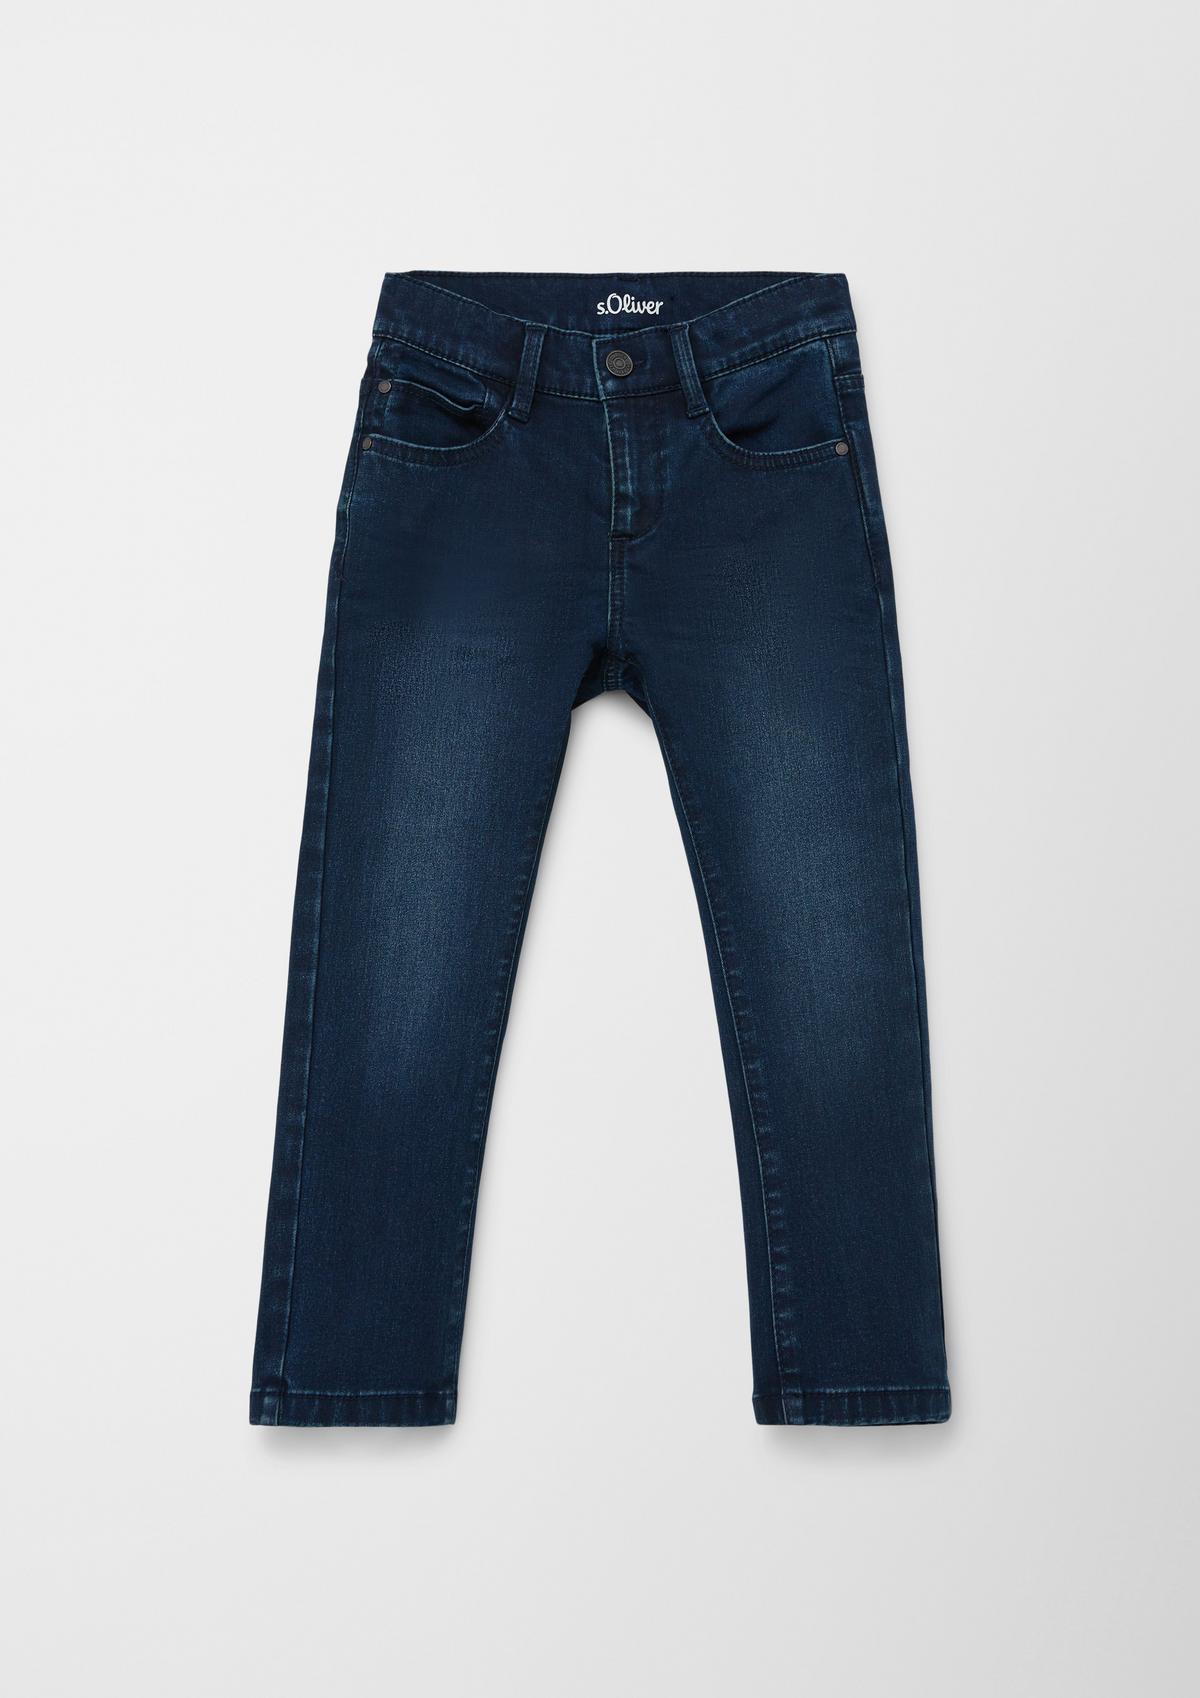 s.Oliver Jeans Pelle / regular fit / mid rise / straight leg / used look